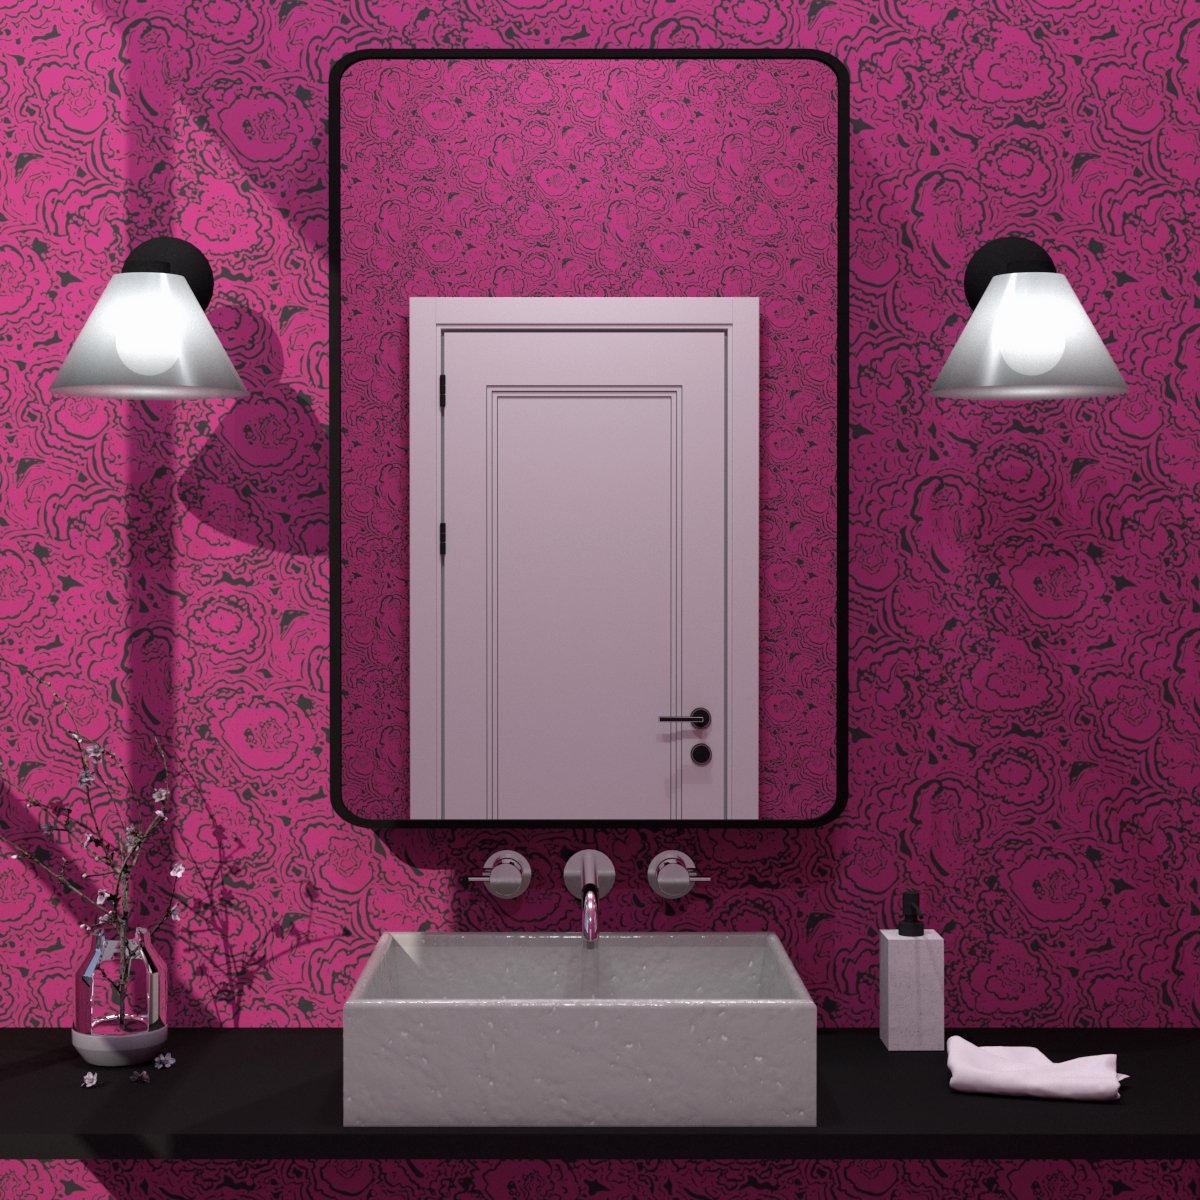 052214-19-20_Floralish XL ECO_Neon Pink_install.jpg